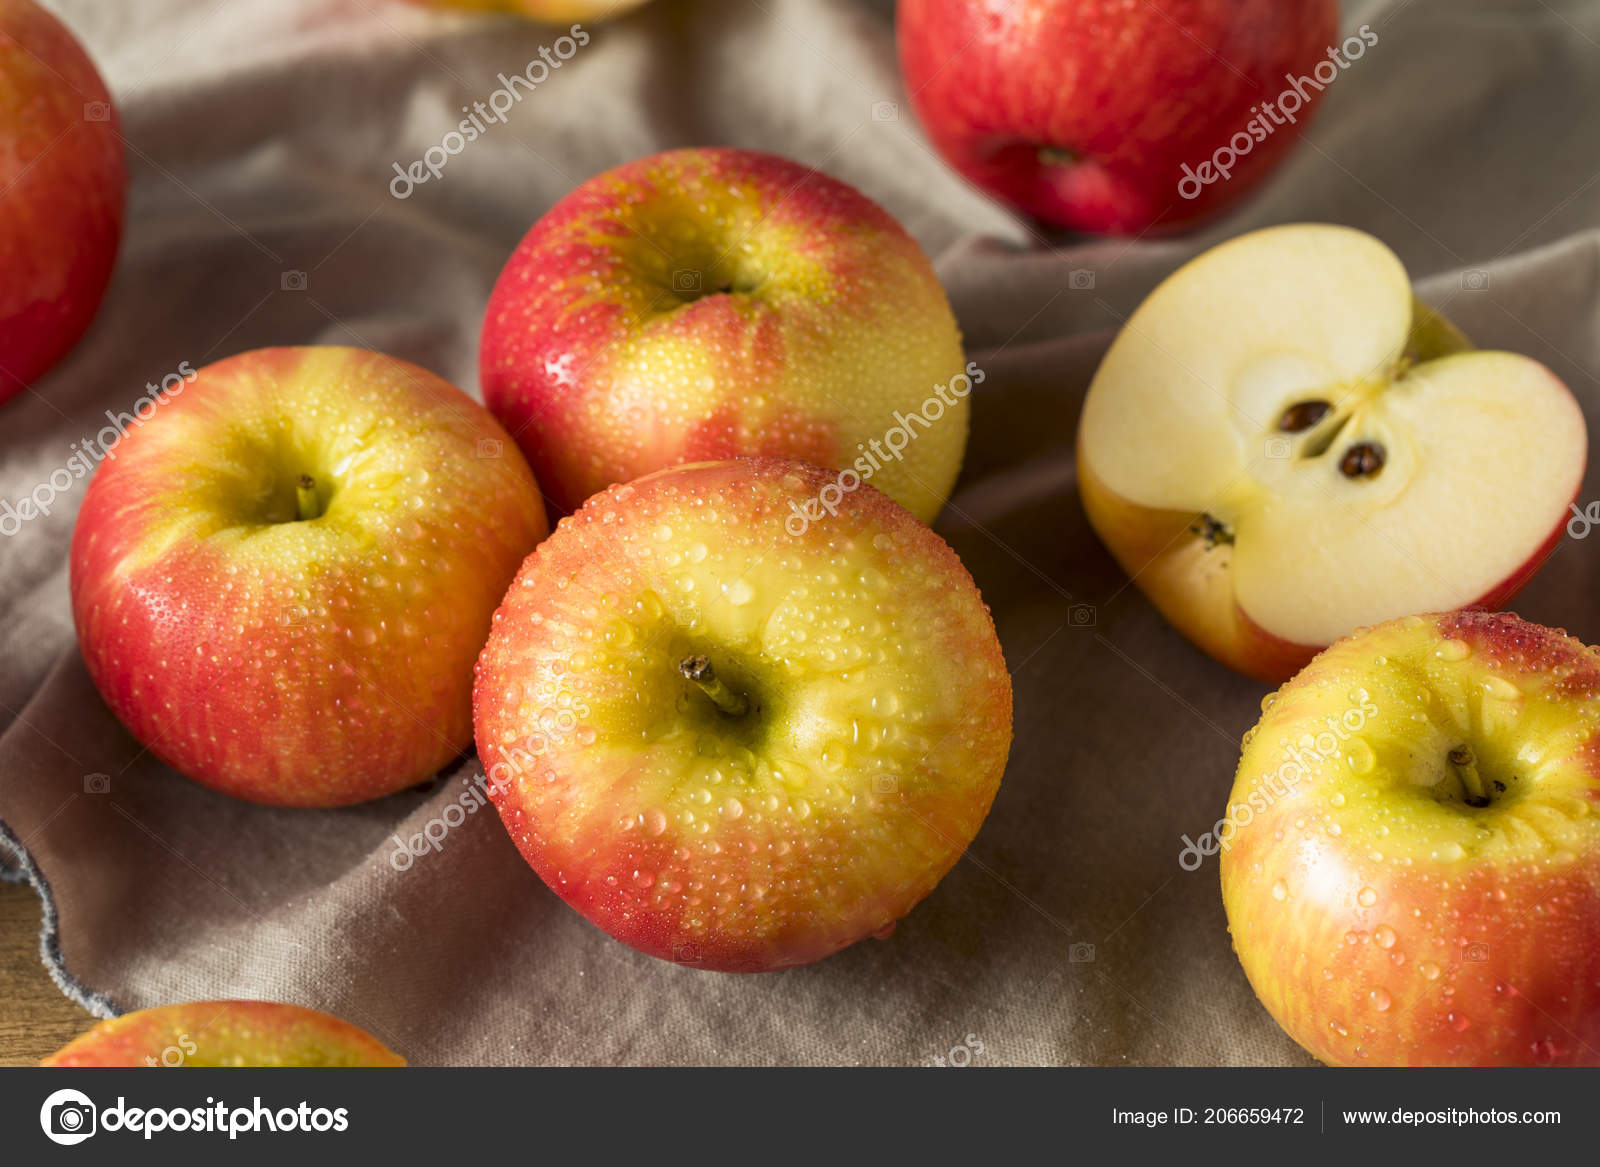 https://st4.depositphotos.com/1692343/20665/i/1600/depositphotos_206659472-stock-photo-raw-red-organic-honeycrisp-apples.jpg